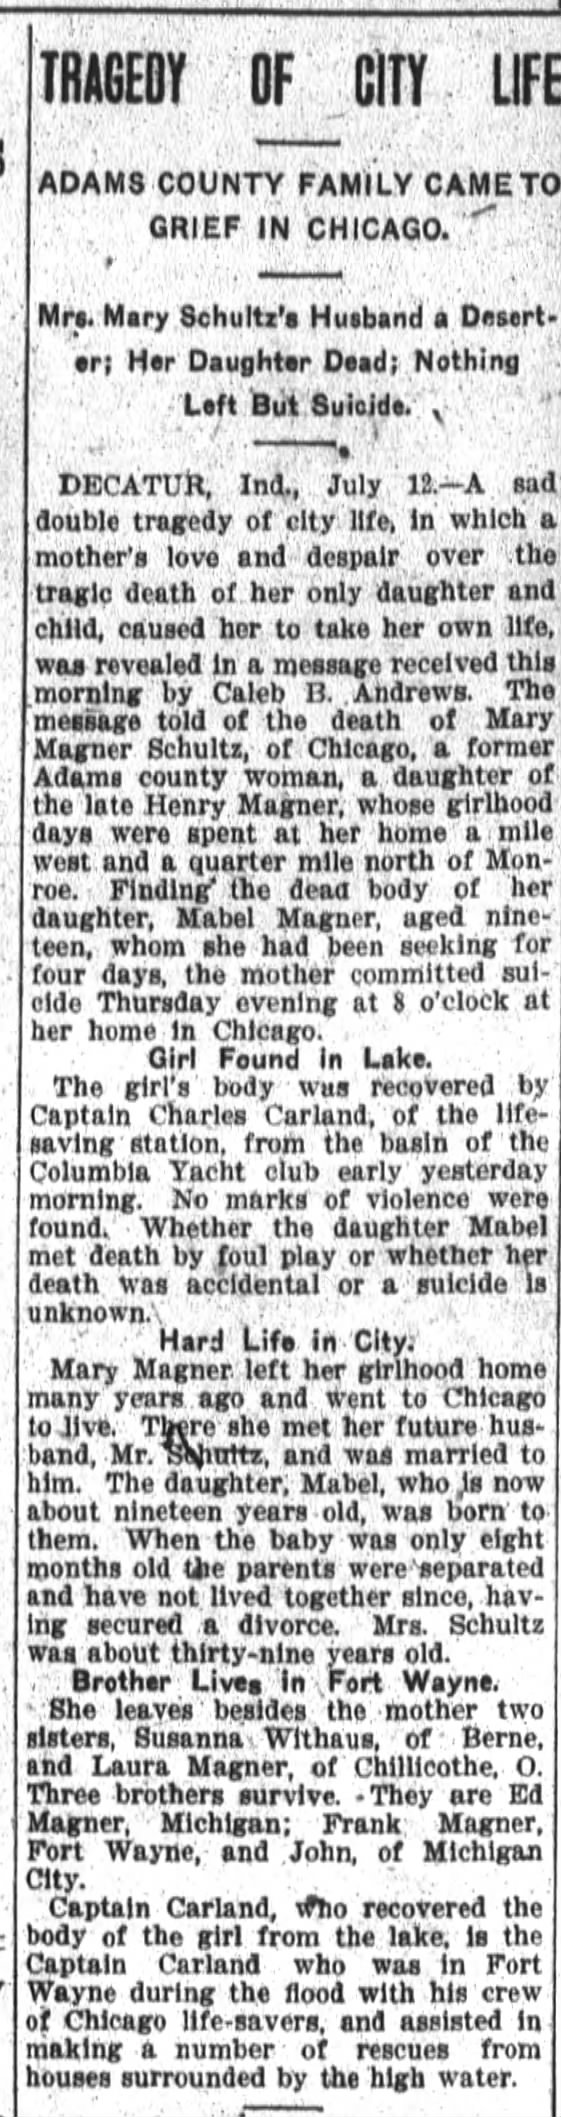 Suicide of Mary Magner after death of daughter Mabel Magner.